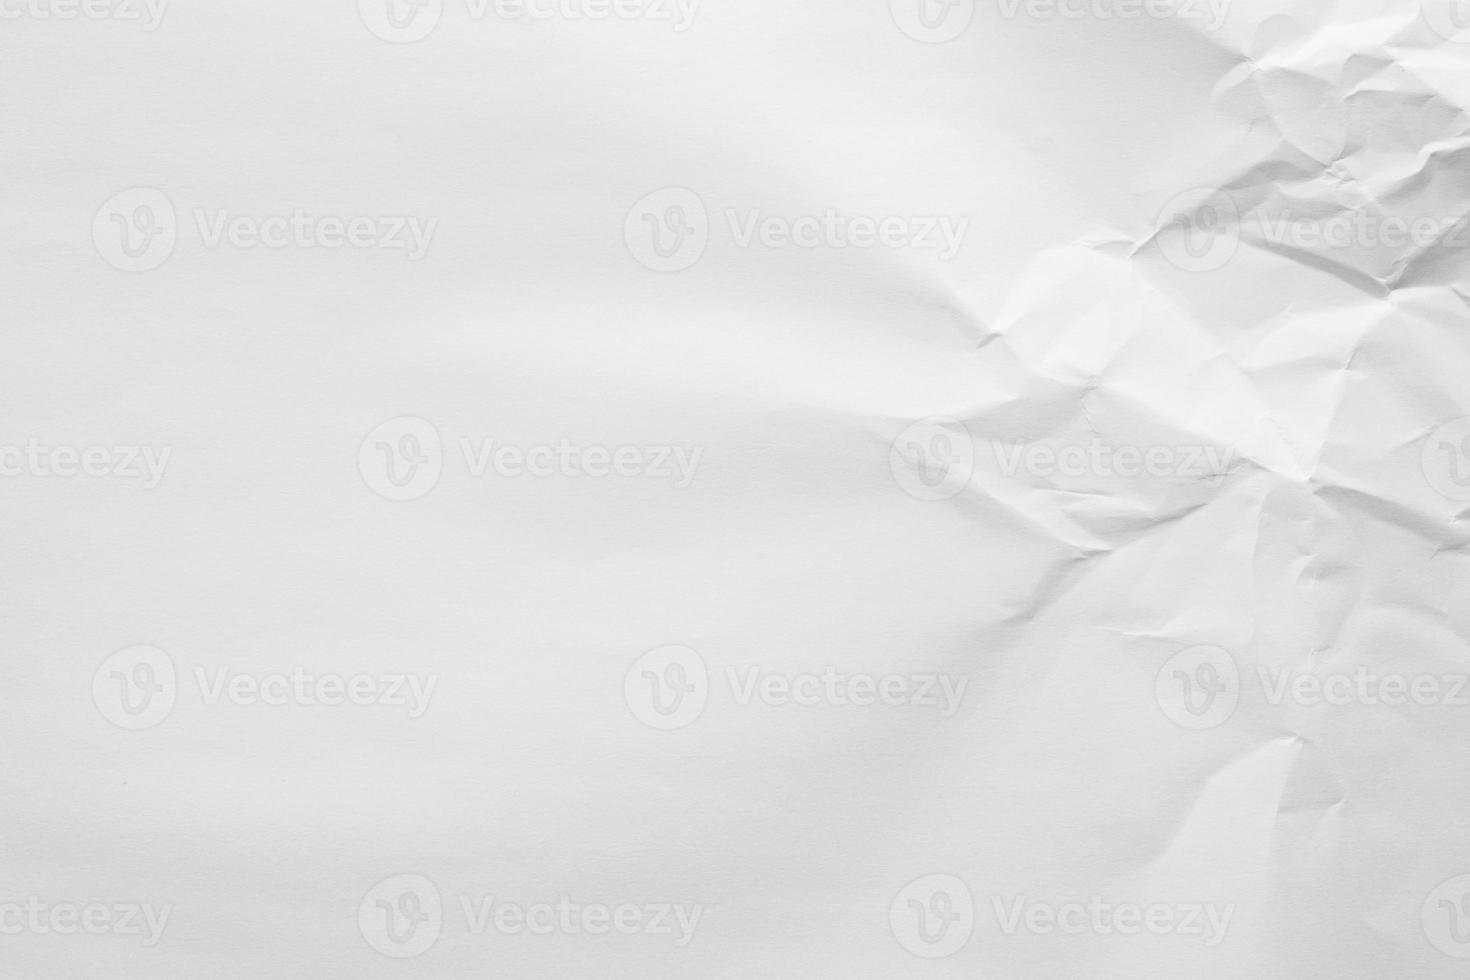 abstrakt vit skrynkliga papper textur bakgrund foto